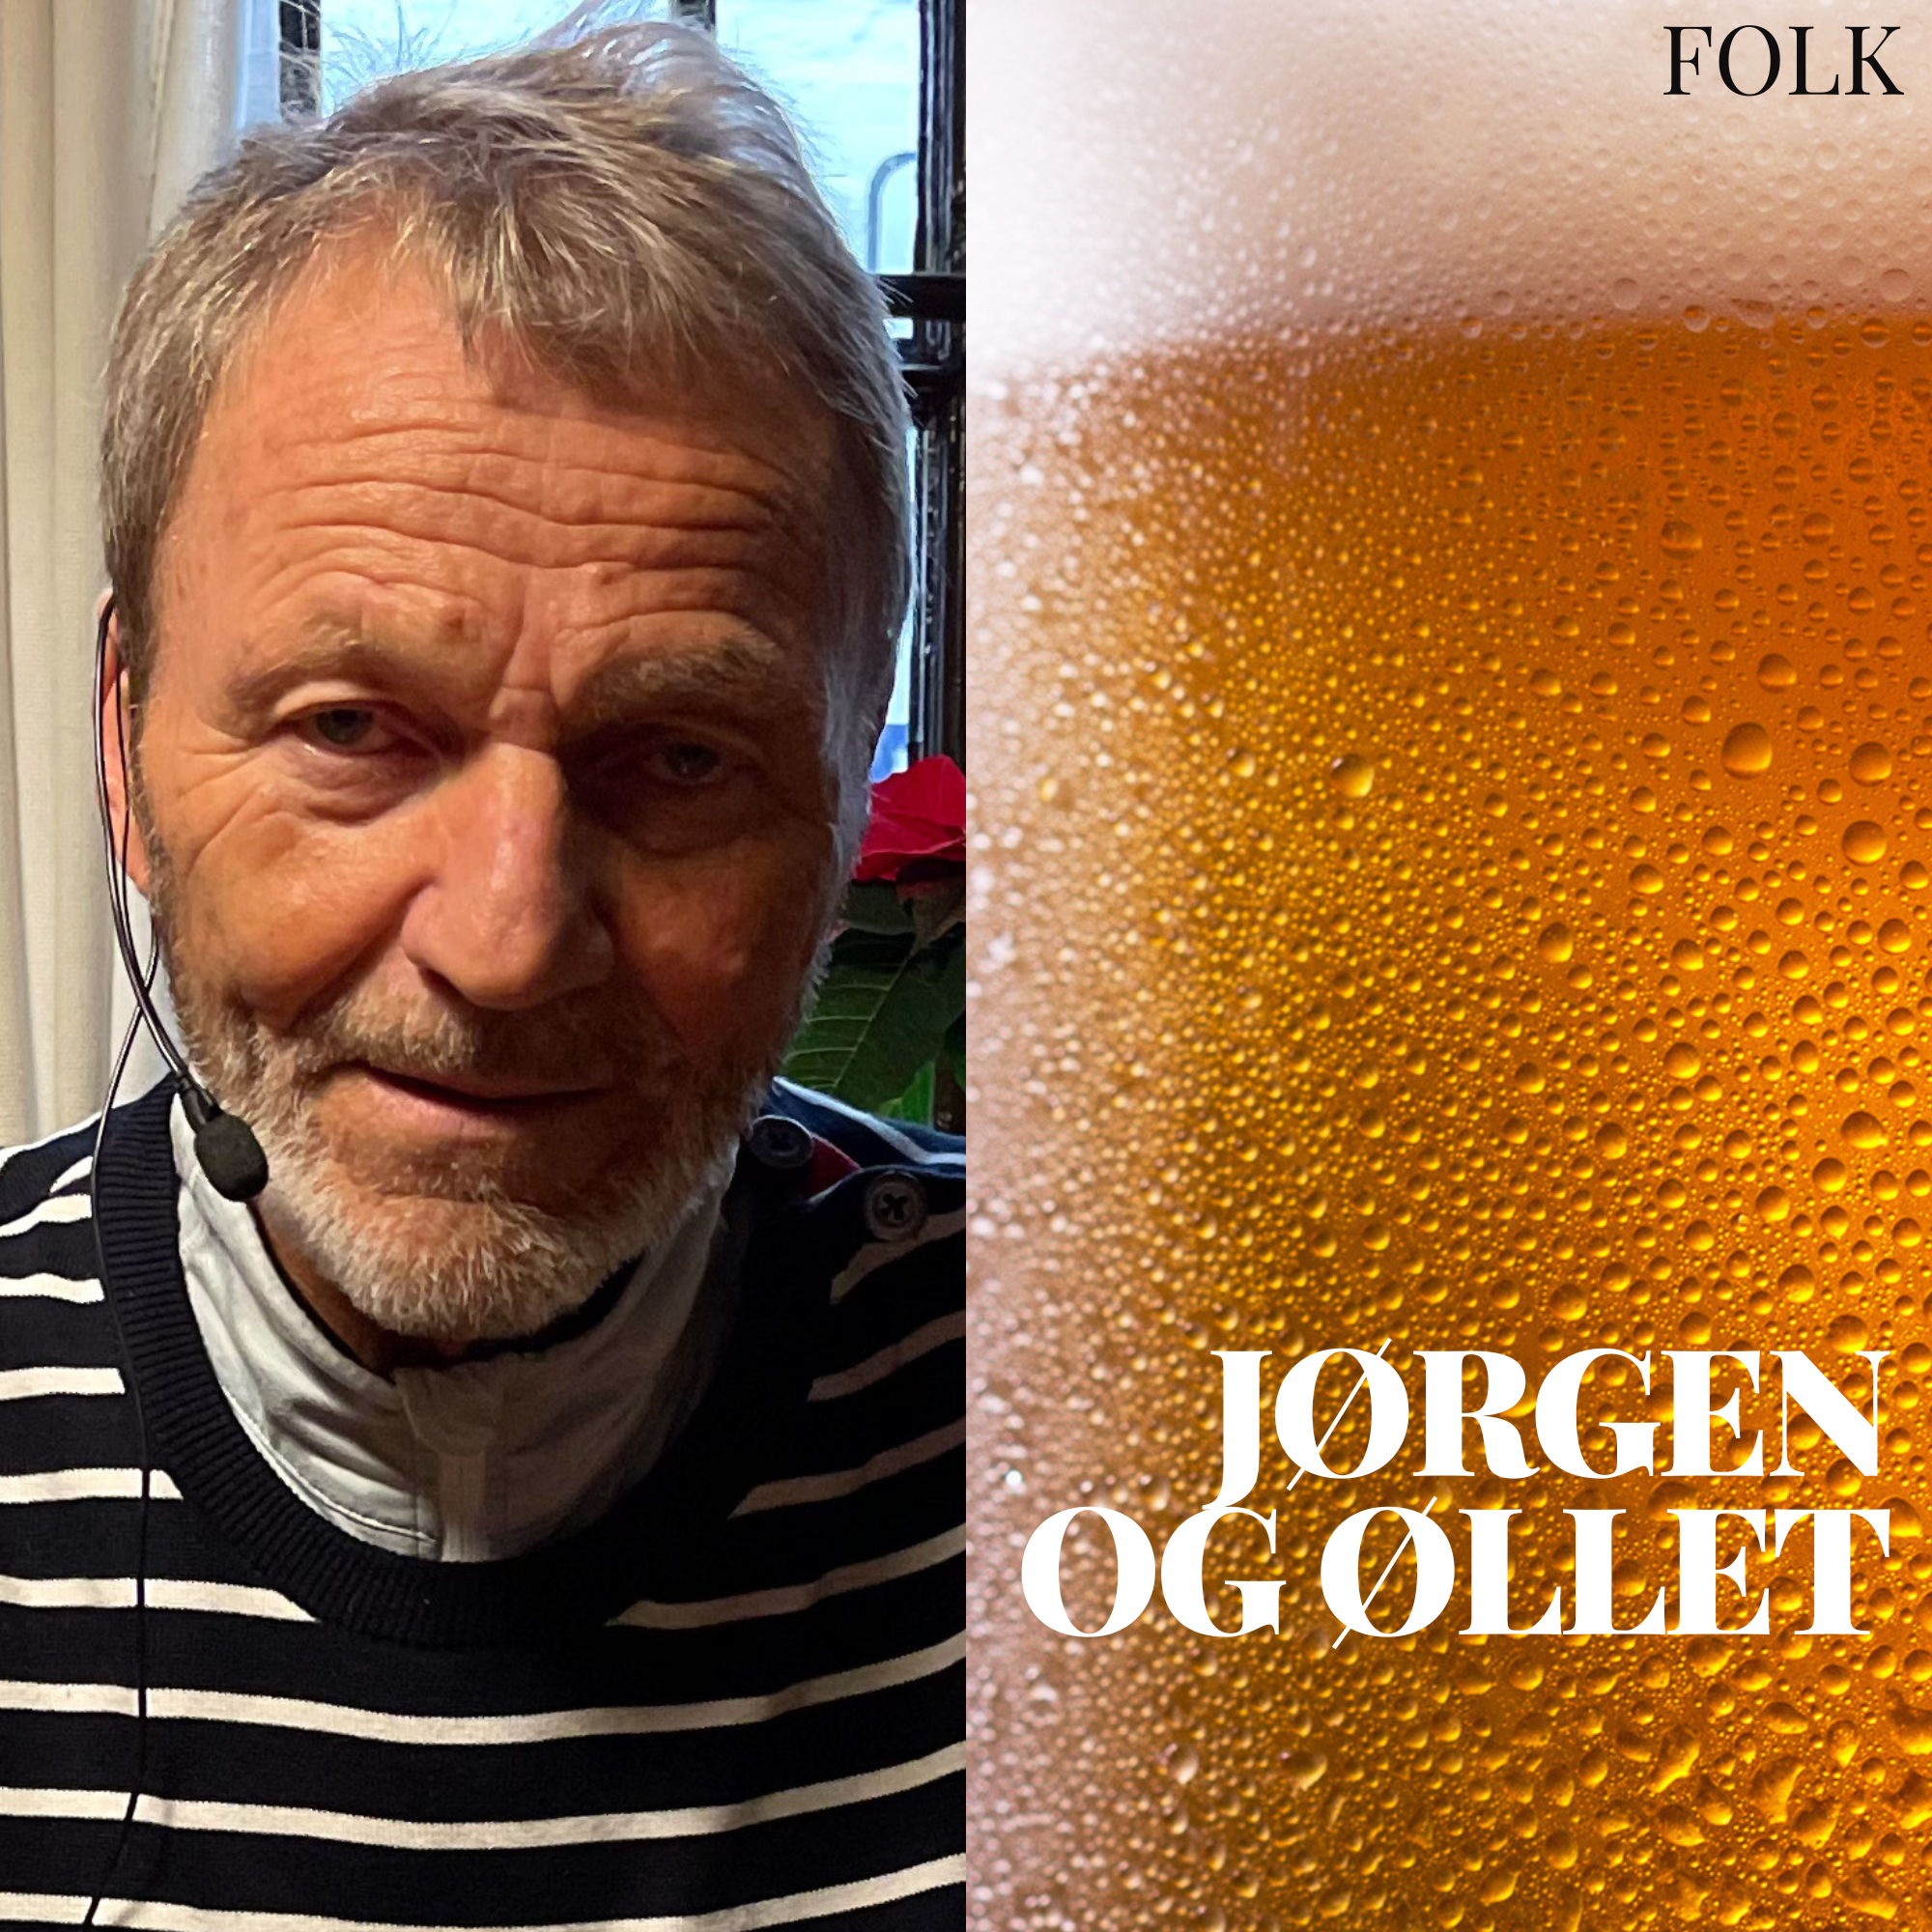 Jørgen og Øllet 4: Det er Nordeuropas højeste skorsten